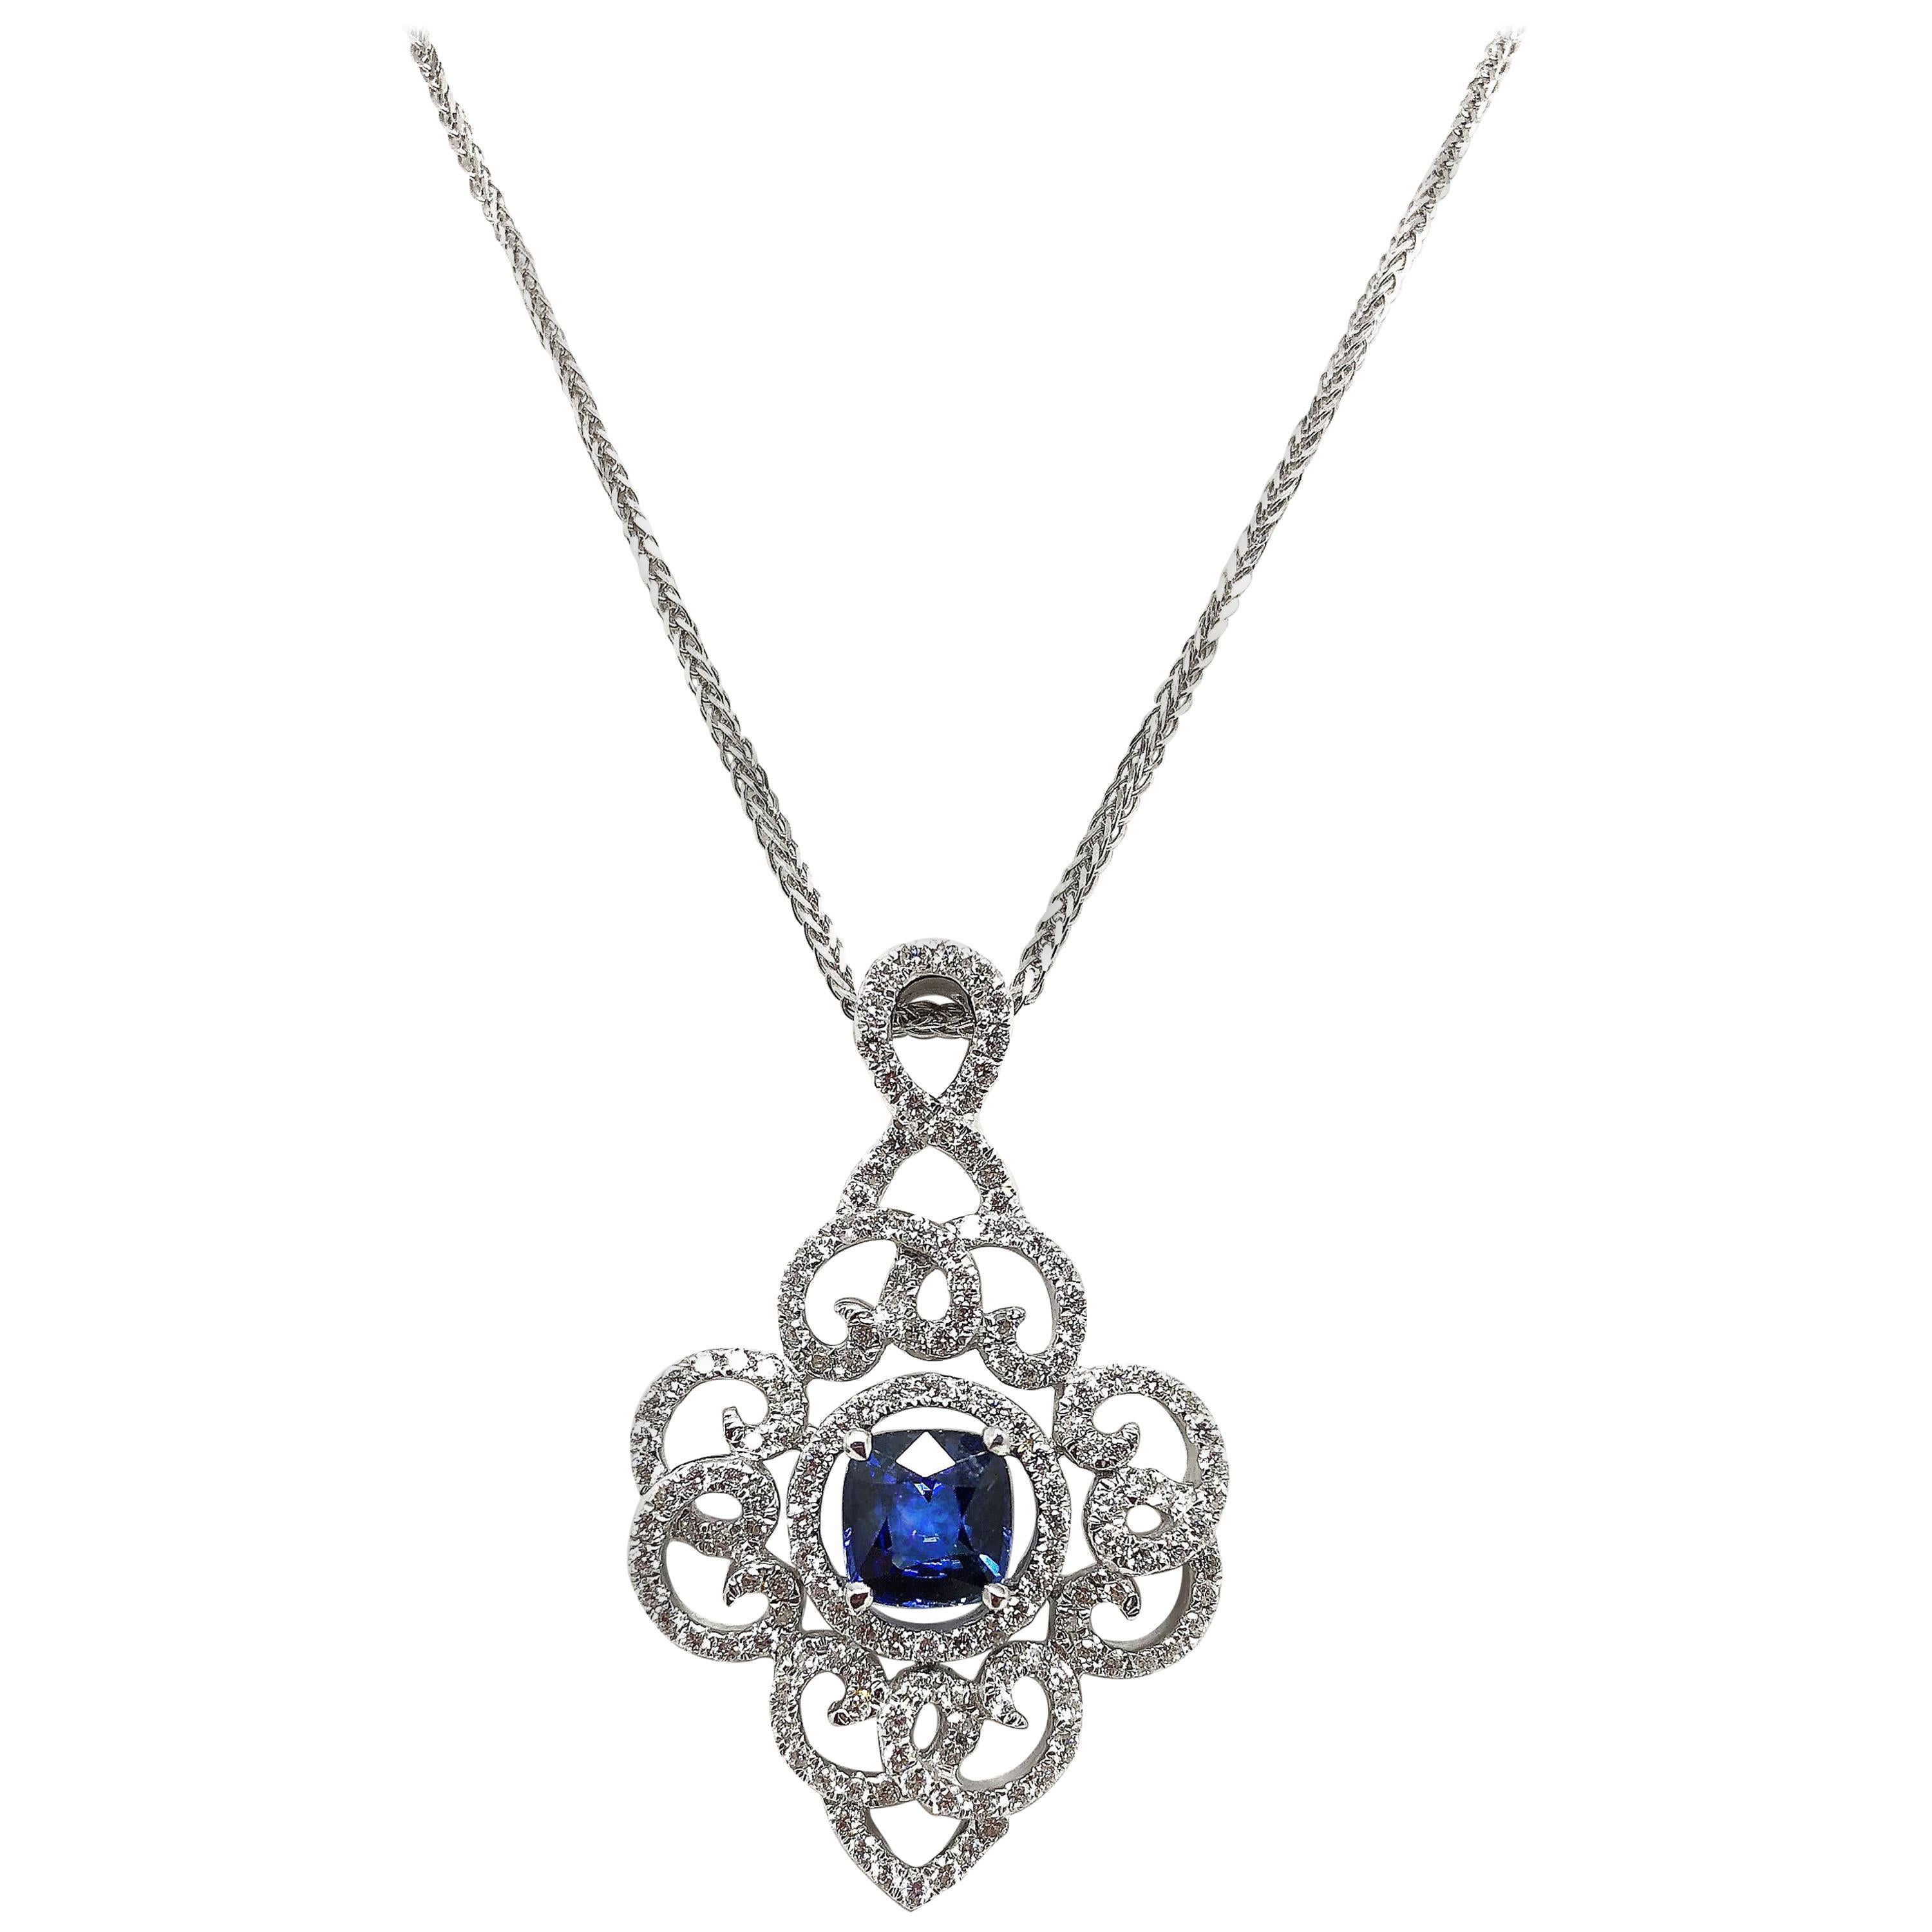  Gilin Blue Sapphire Diamond Pendant